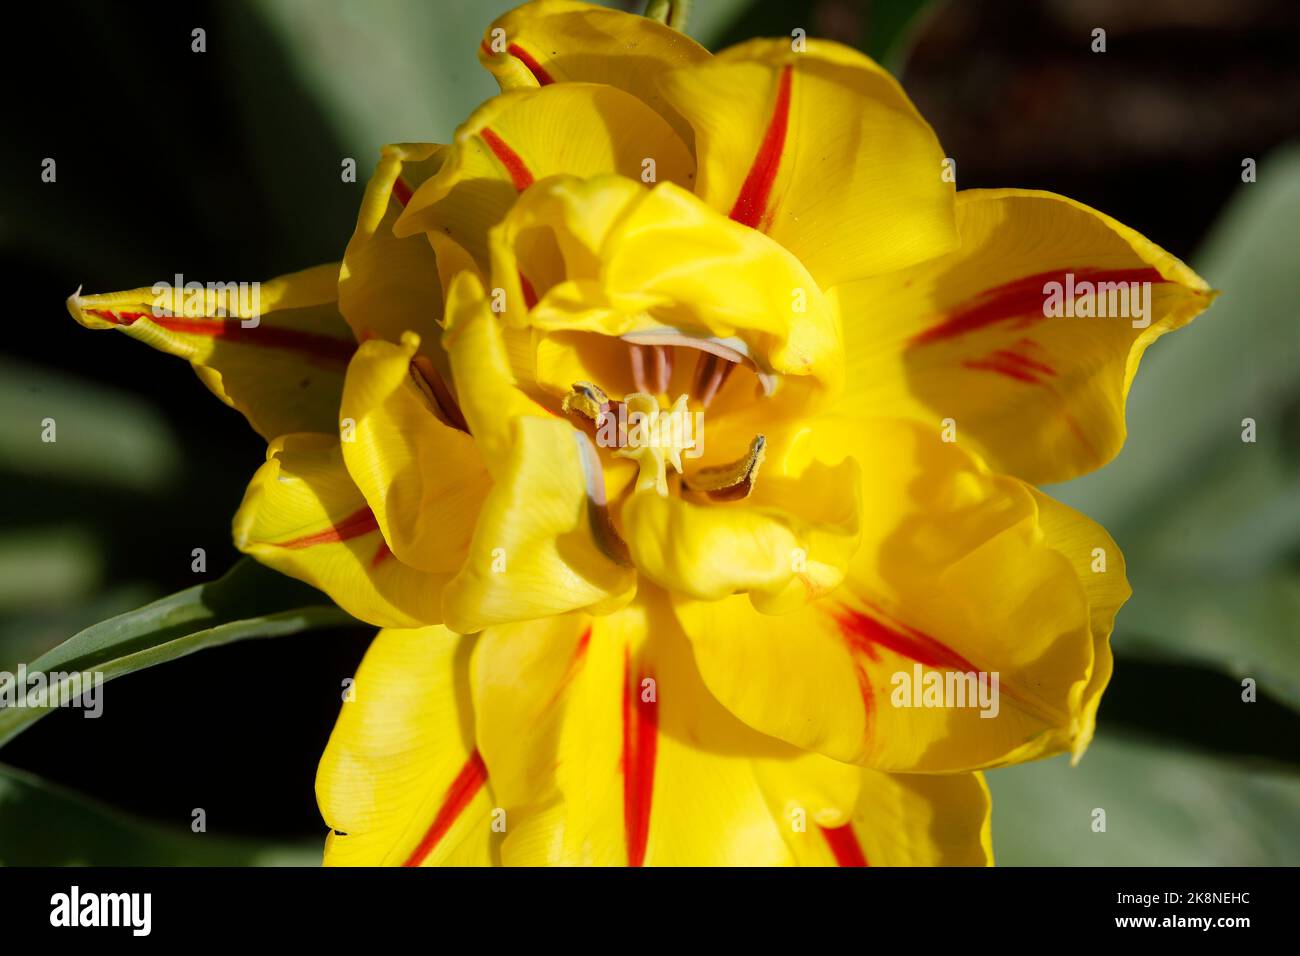 Gelb blÃ¼hendeTulpen (Tulipa), Closeup, Draufsicht, Deutschland Stock Photo